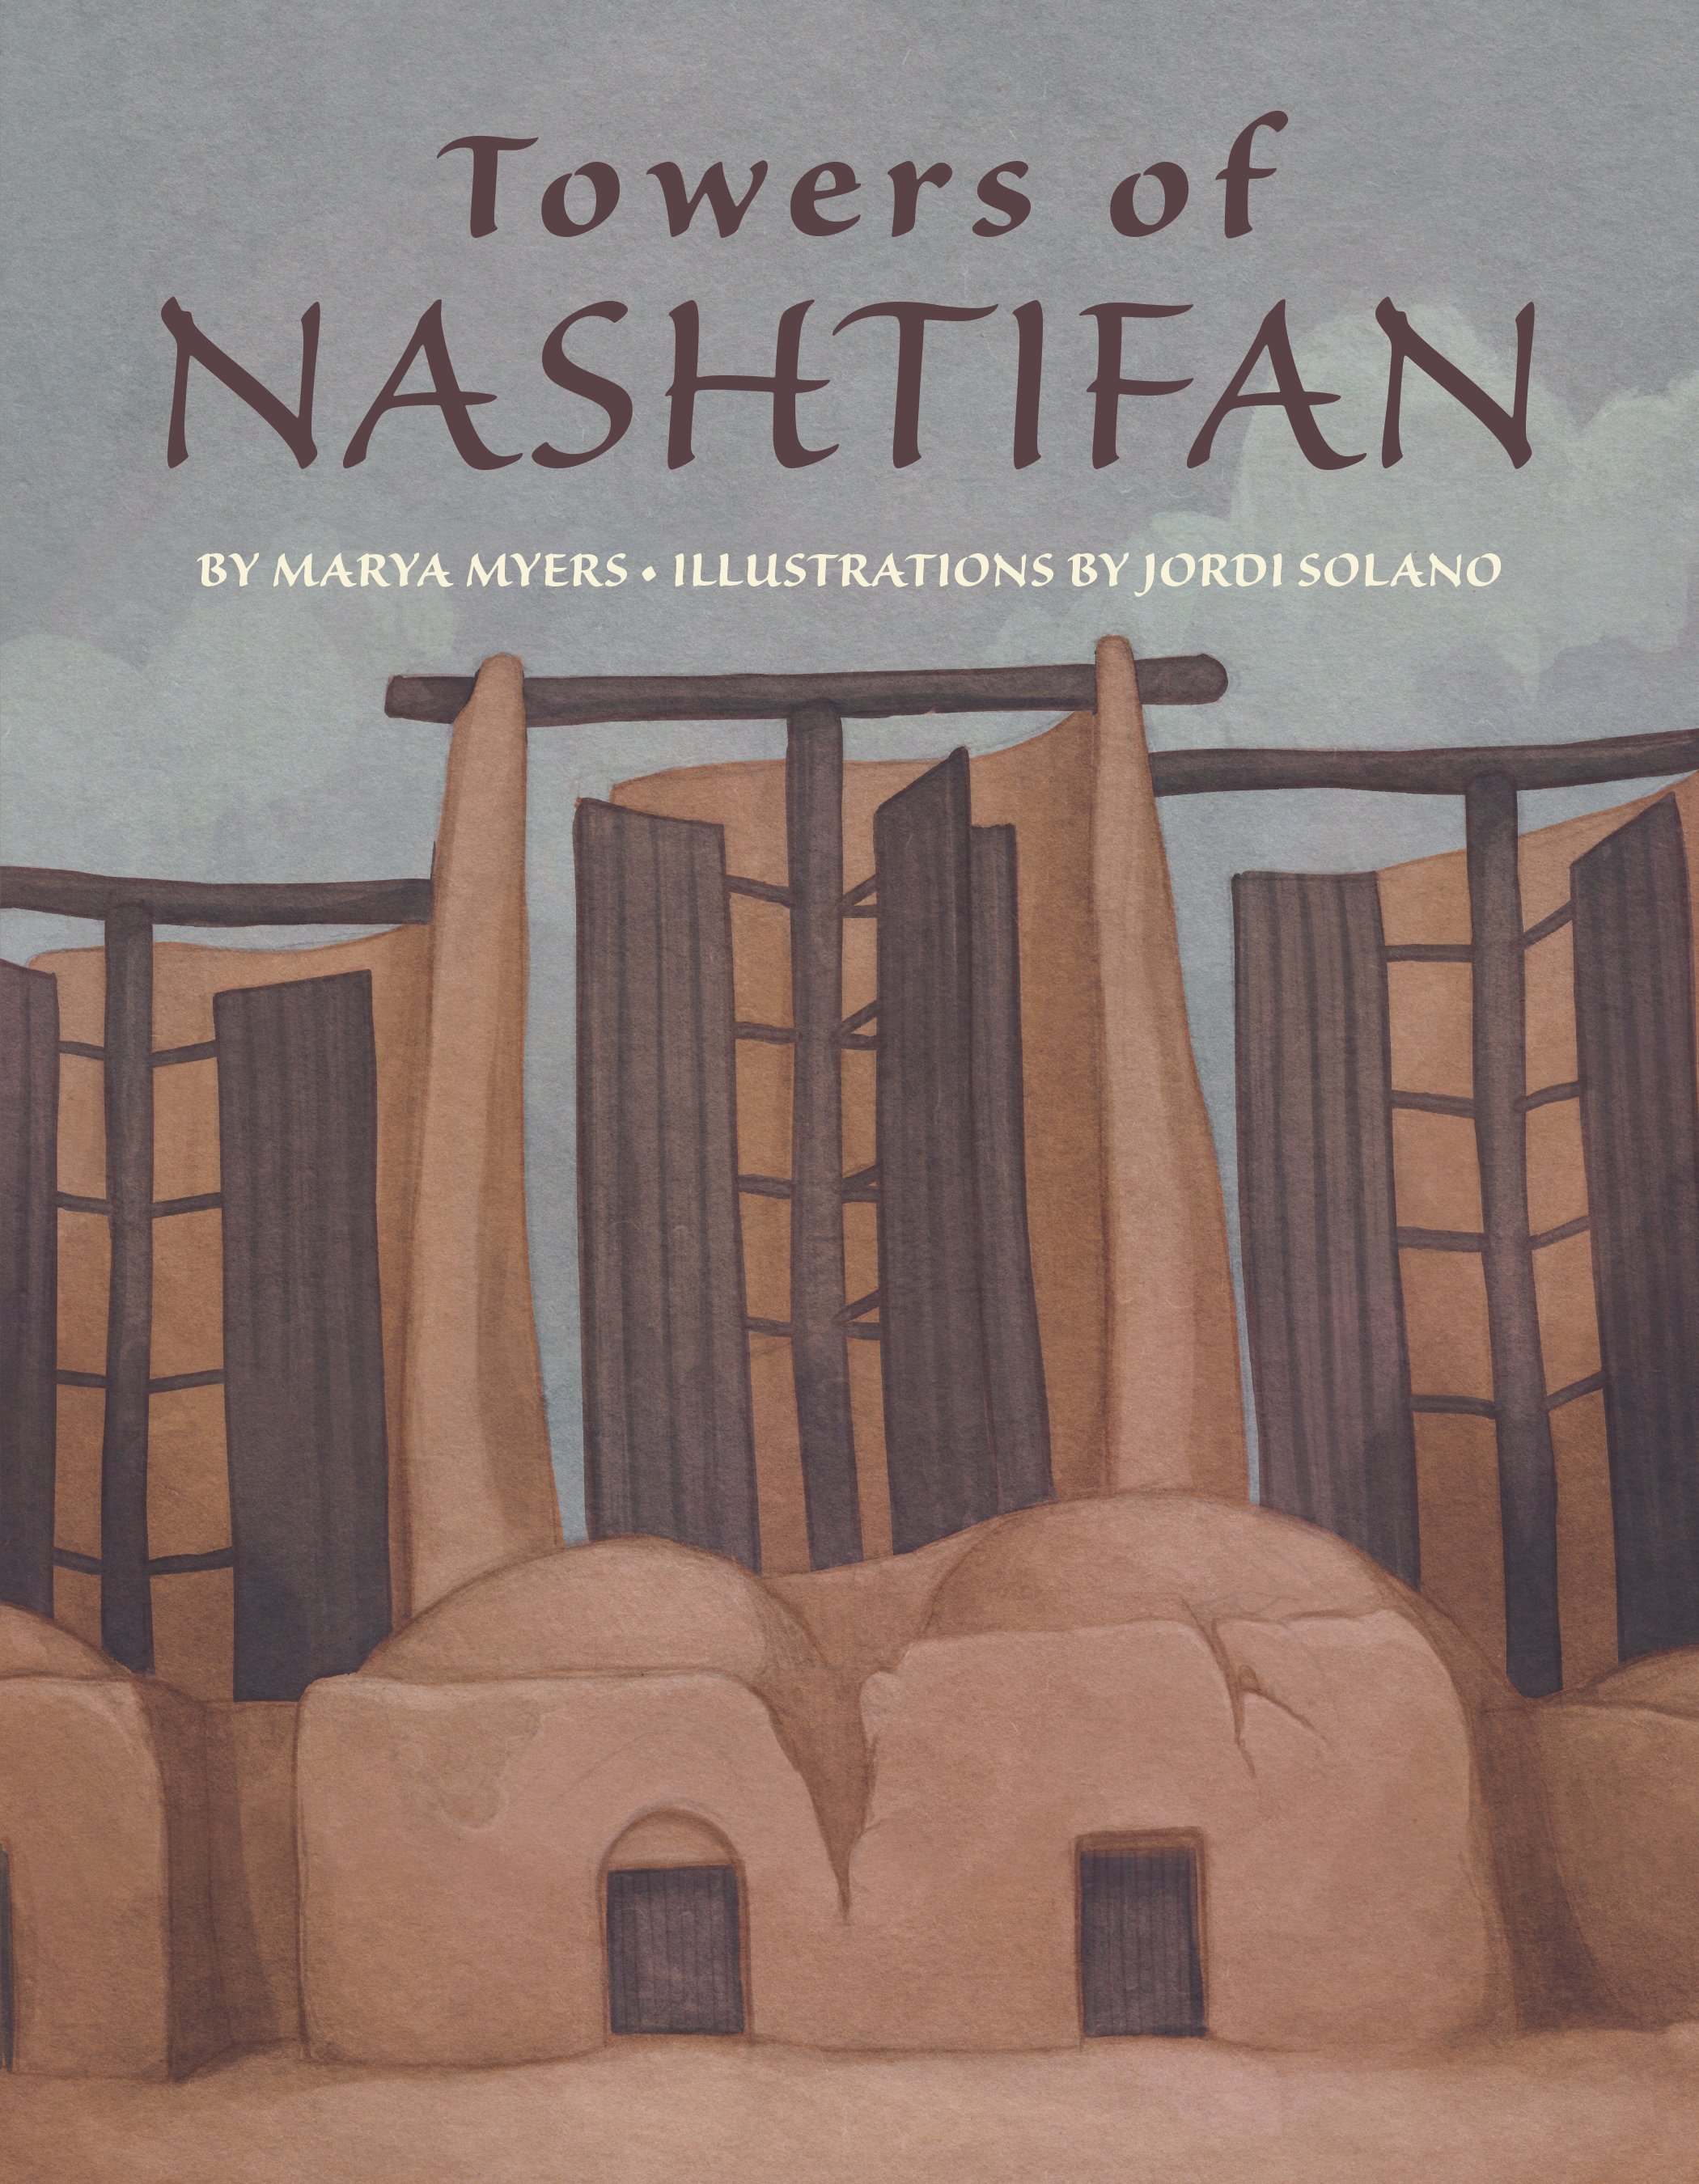 Towers of Nashtifan cover.jpg